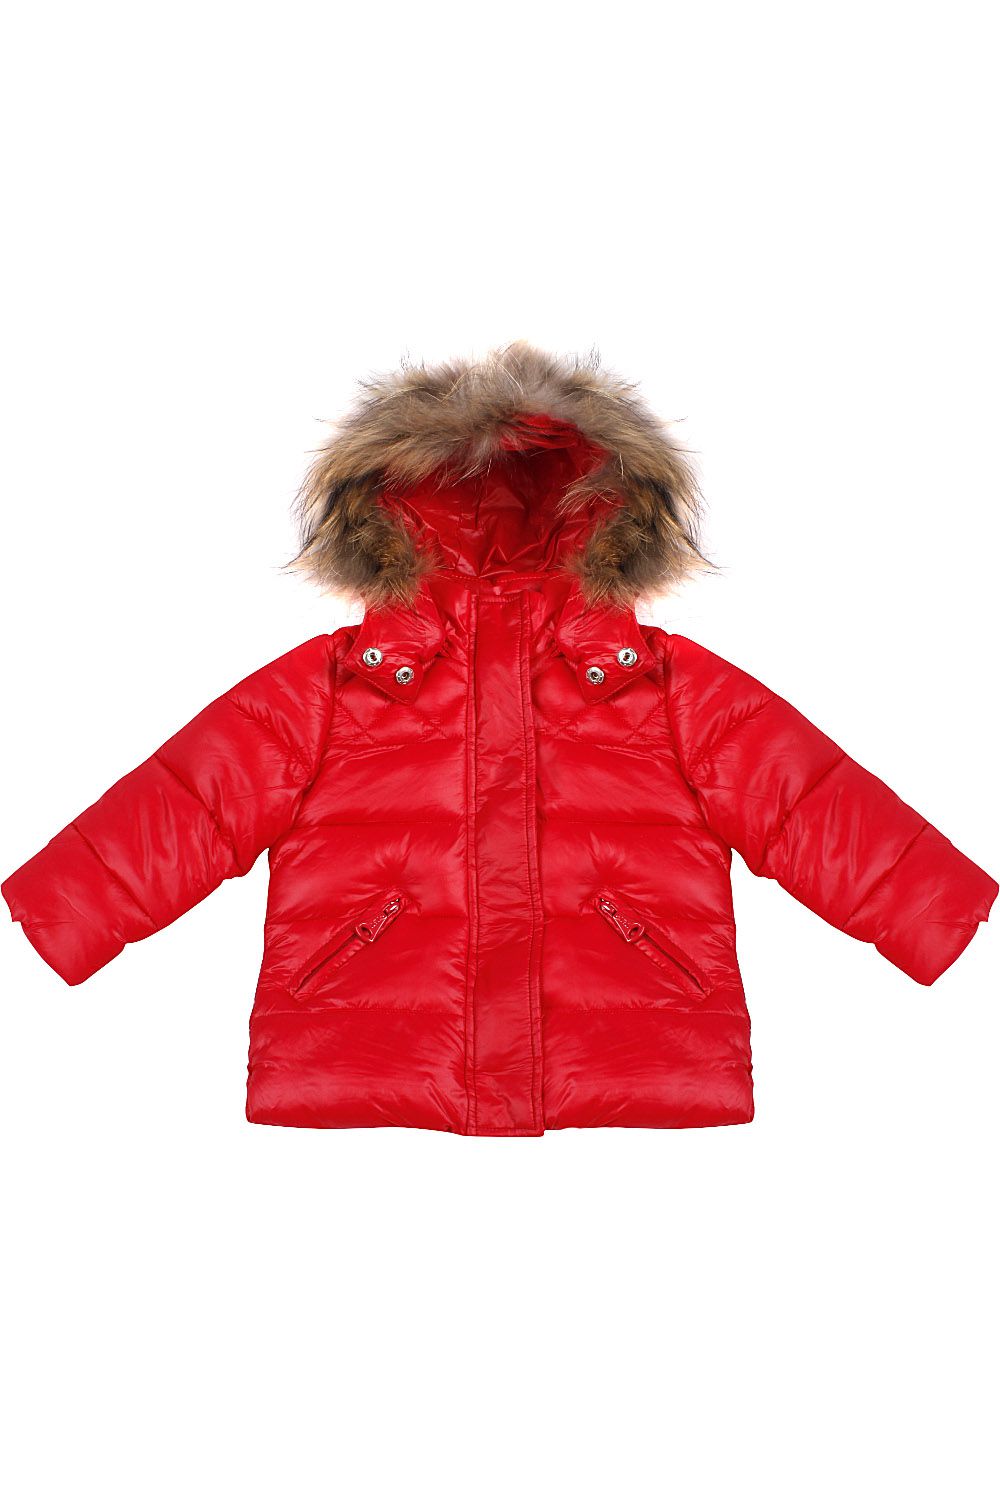 Куртка To Be Too, размер 74, цвет красный TF16820 - фото 1